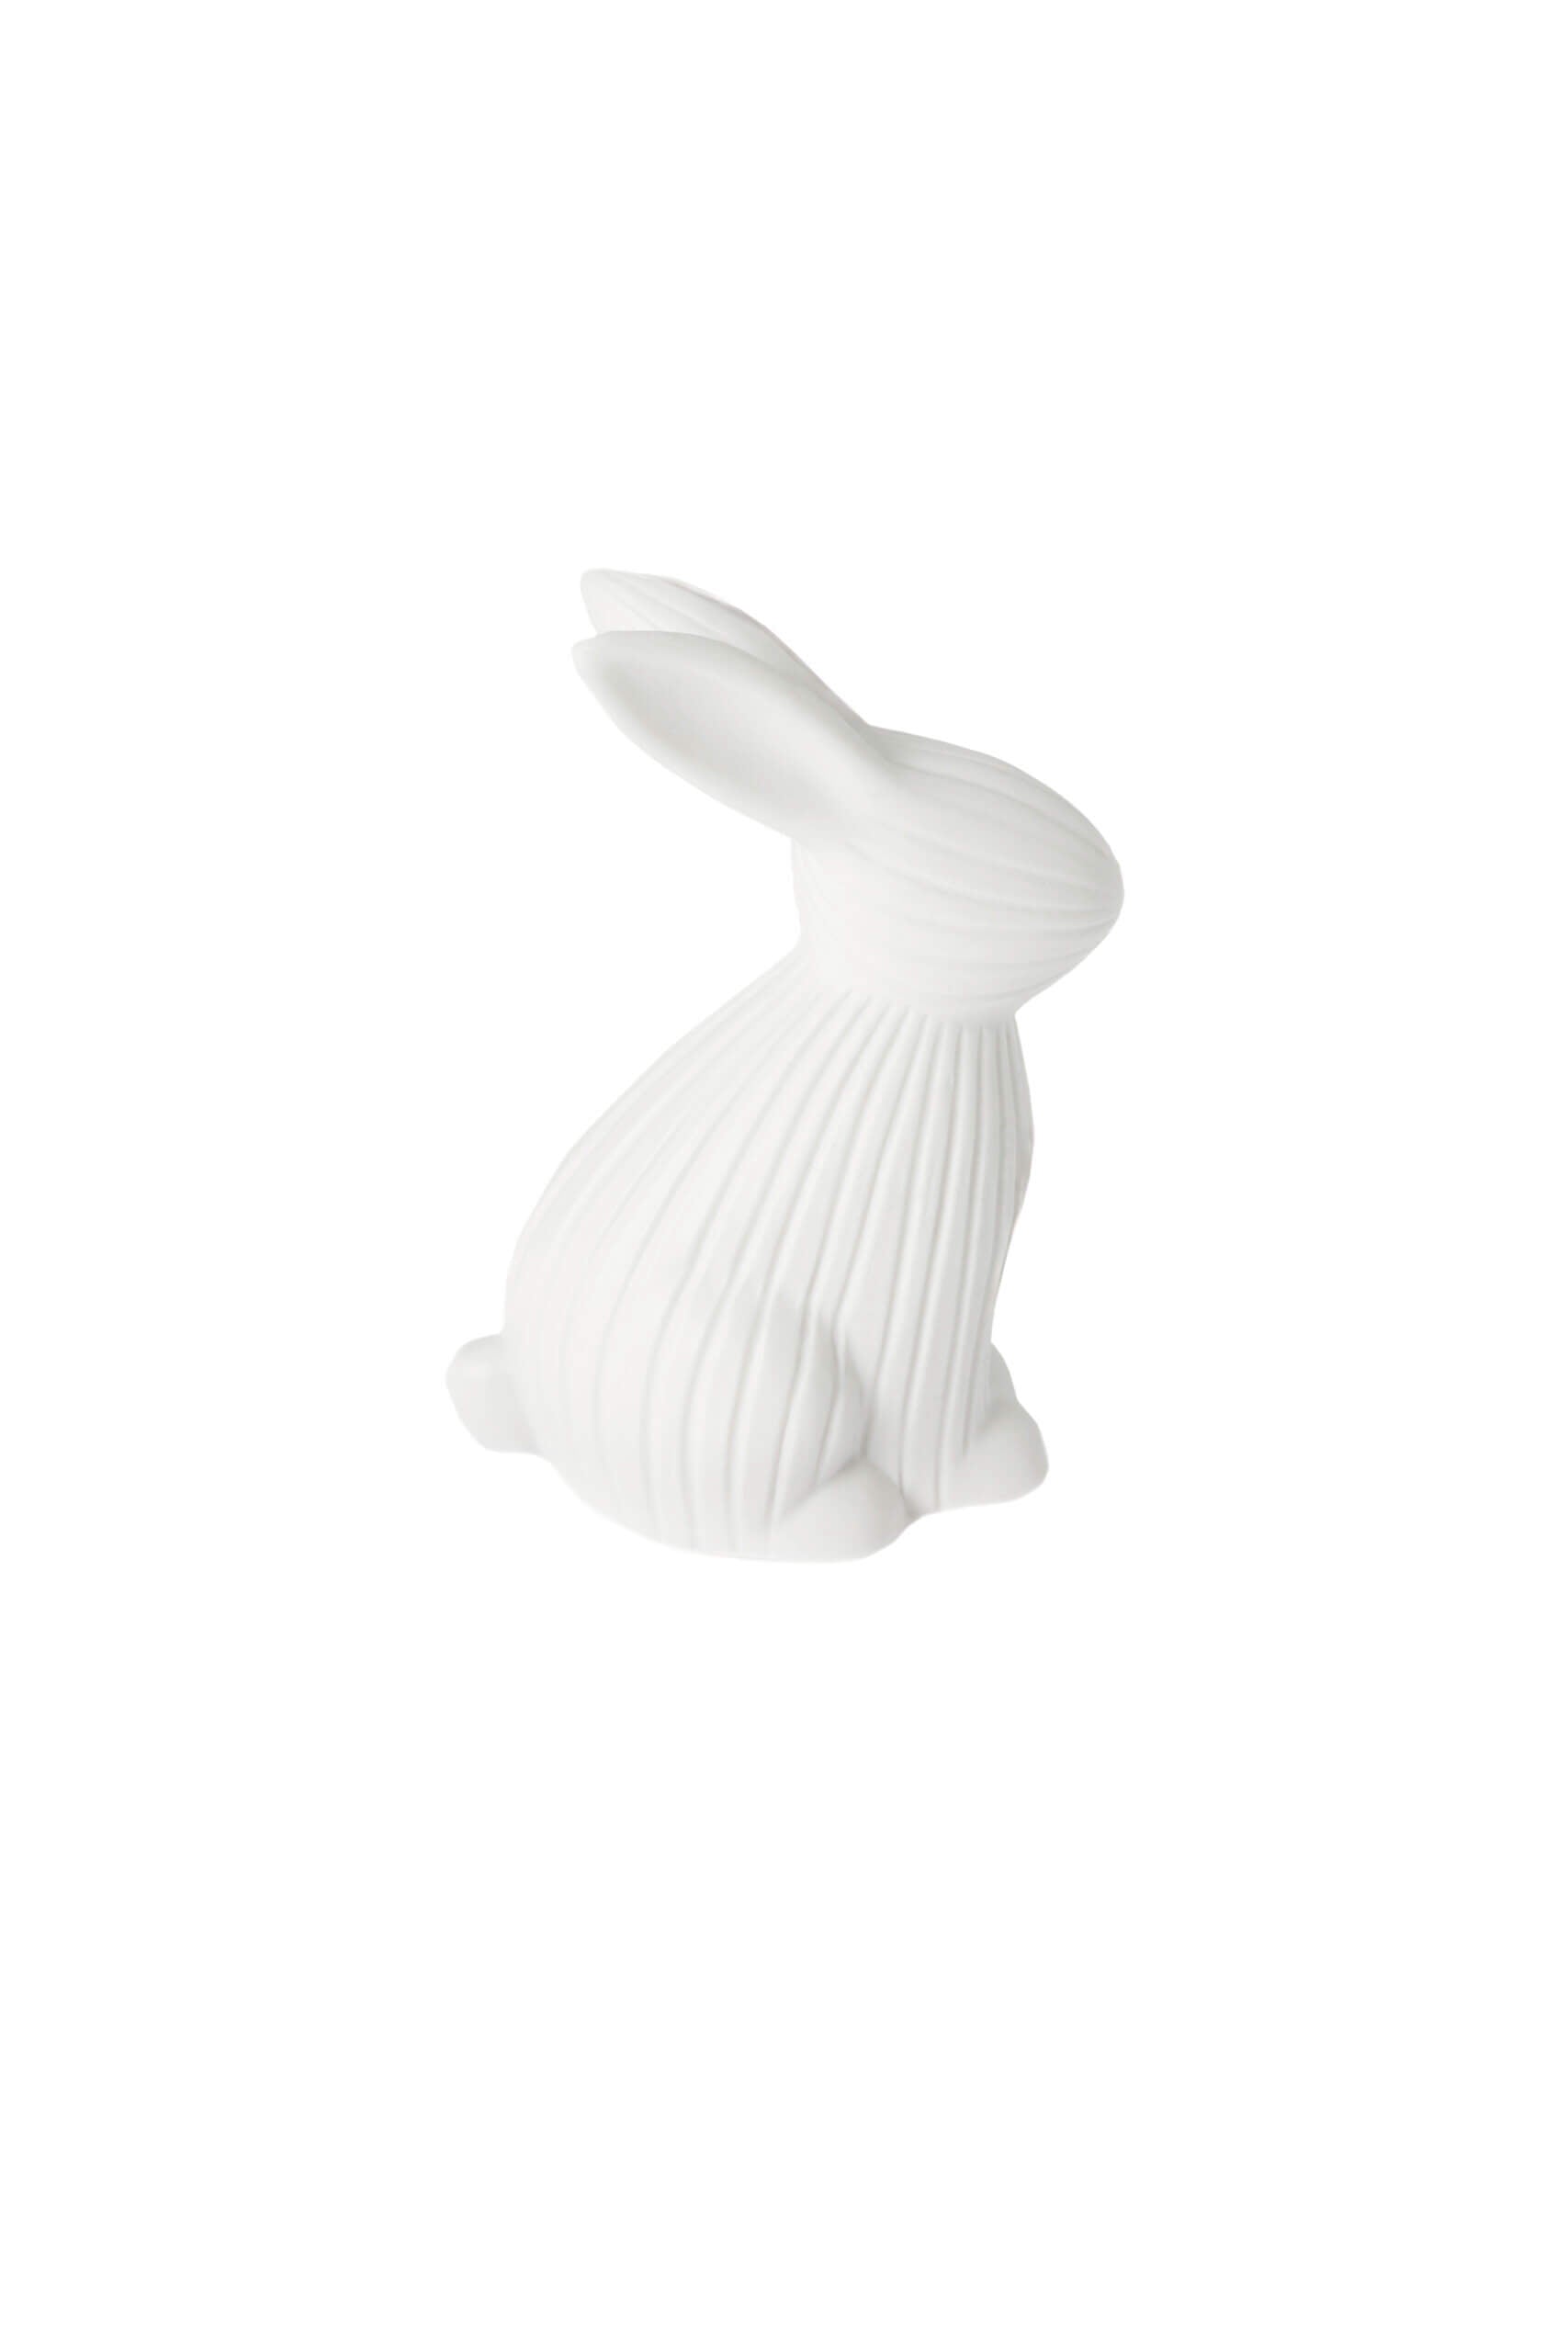 Large Rabbit - Arthur | White | Ceramic | by Storefactory - Lifestory